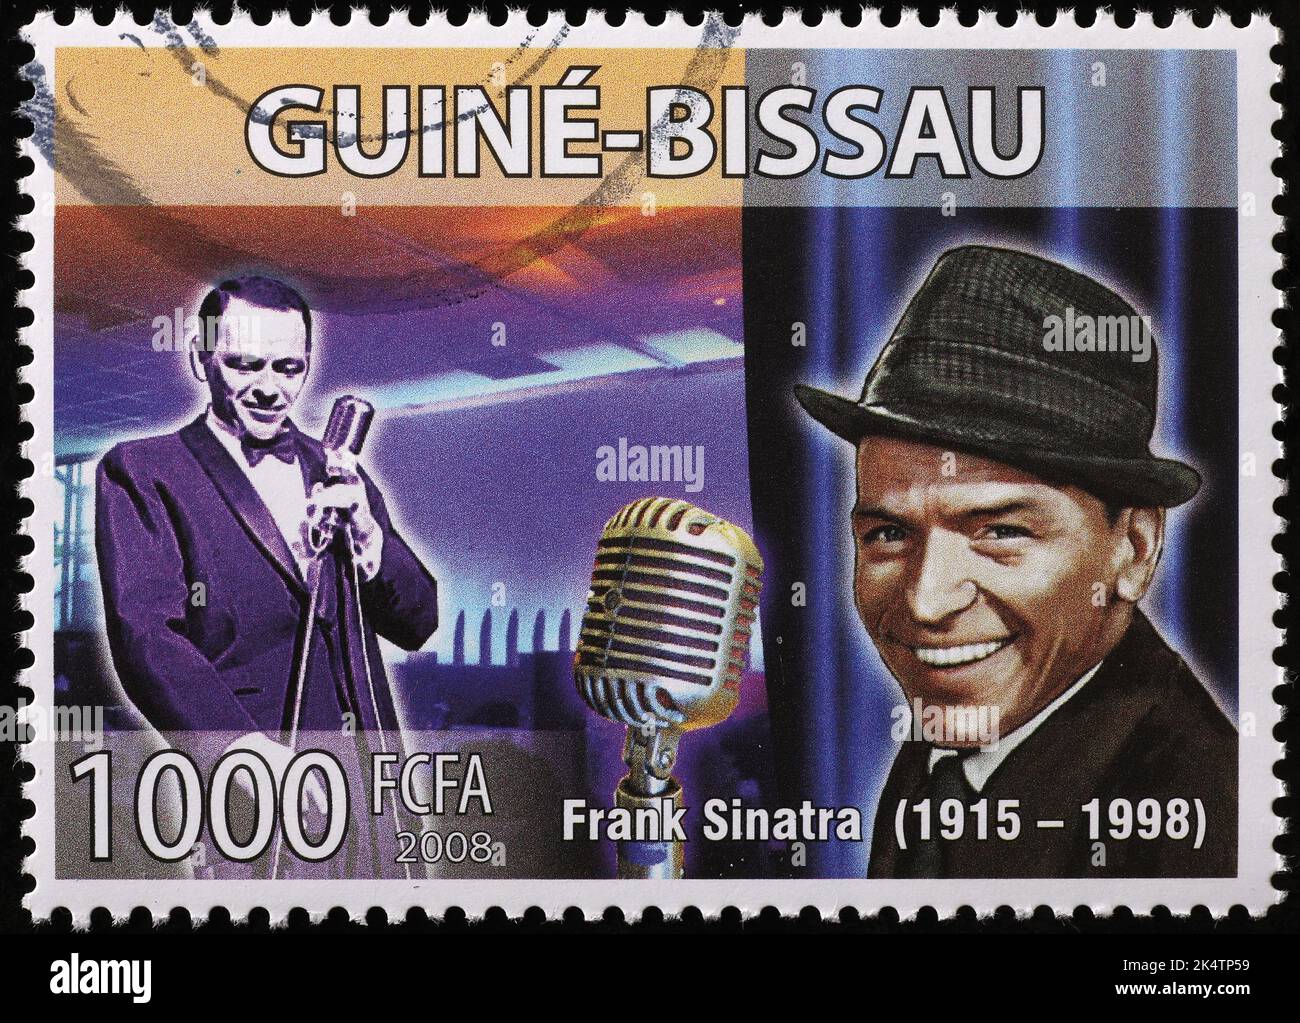 Frank Sinatra on postage stamp of Guinea Bissau Stock Photo